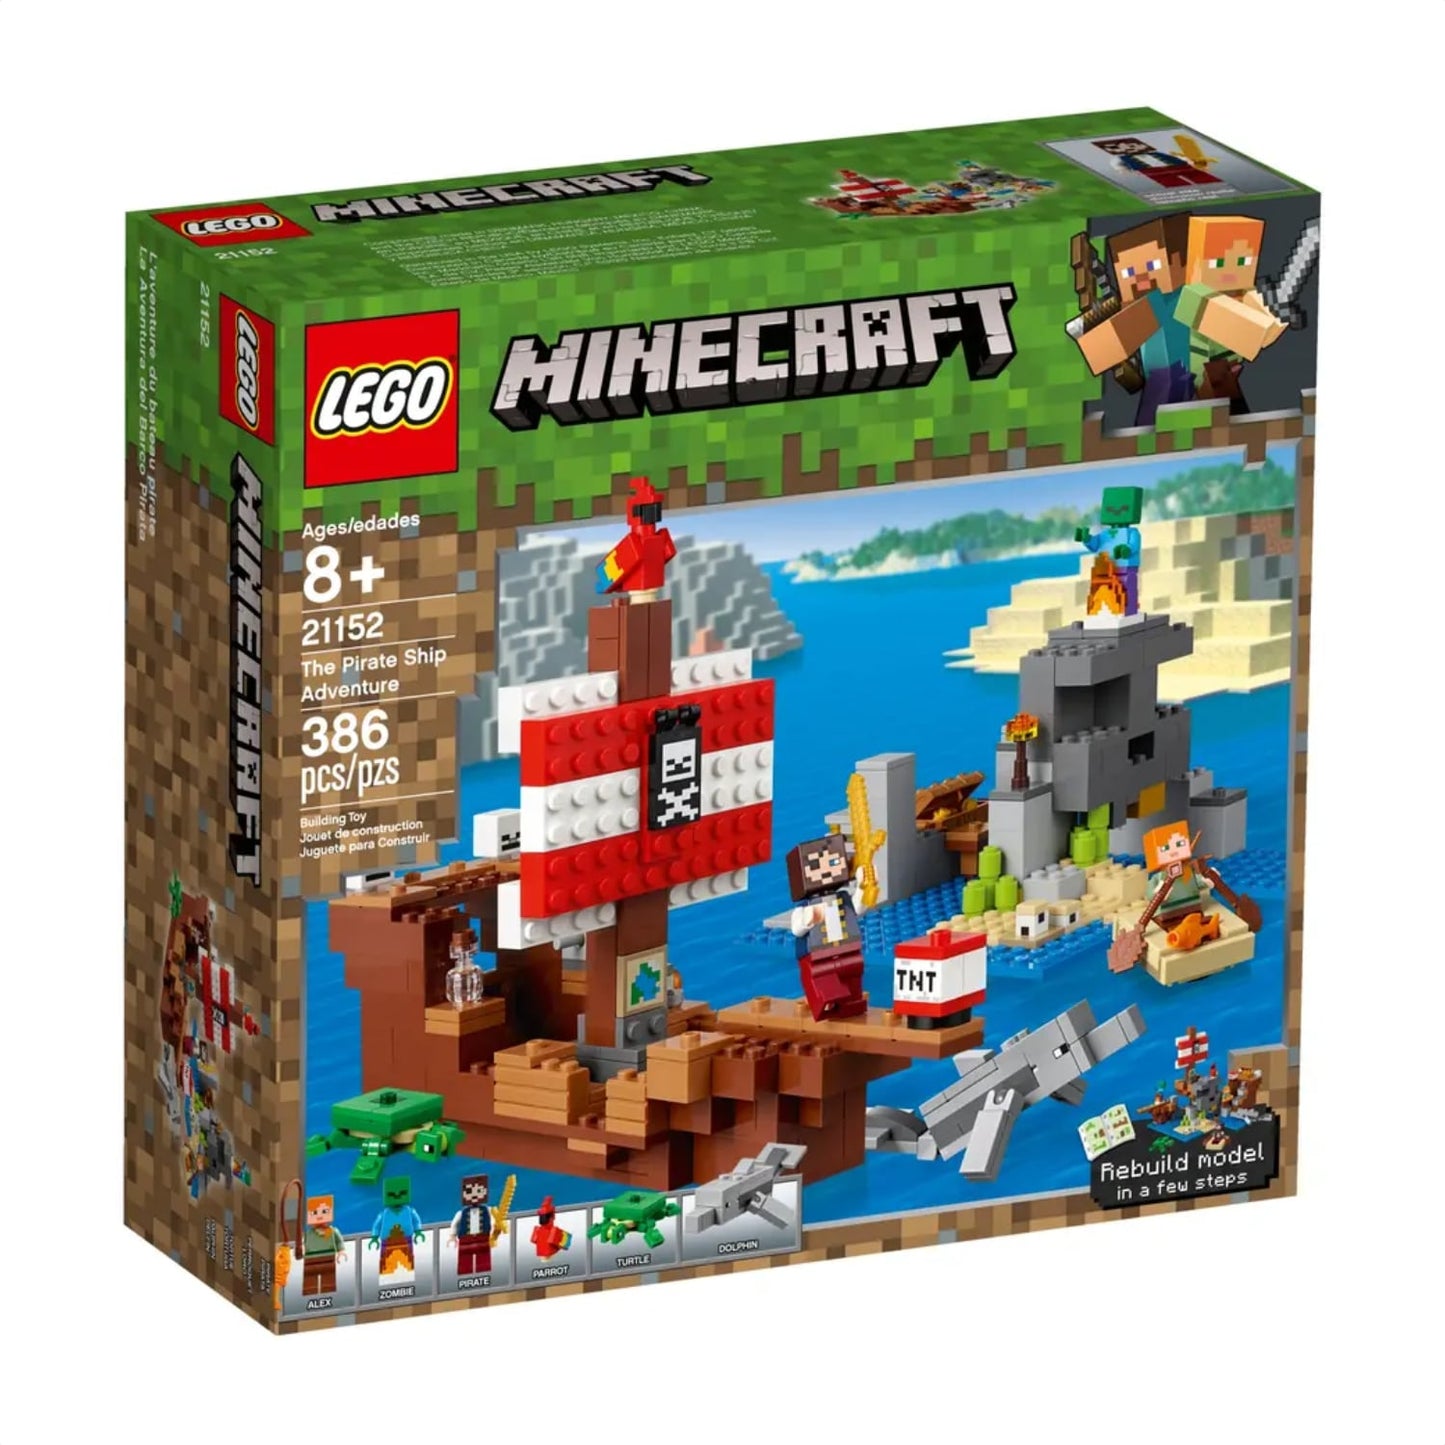 Lego 21152 Minecraft The Pirate Ship Adventure